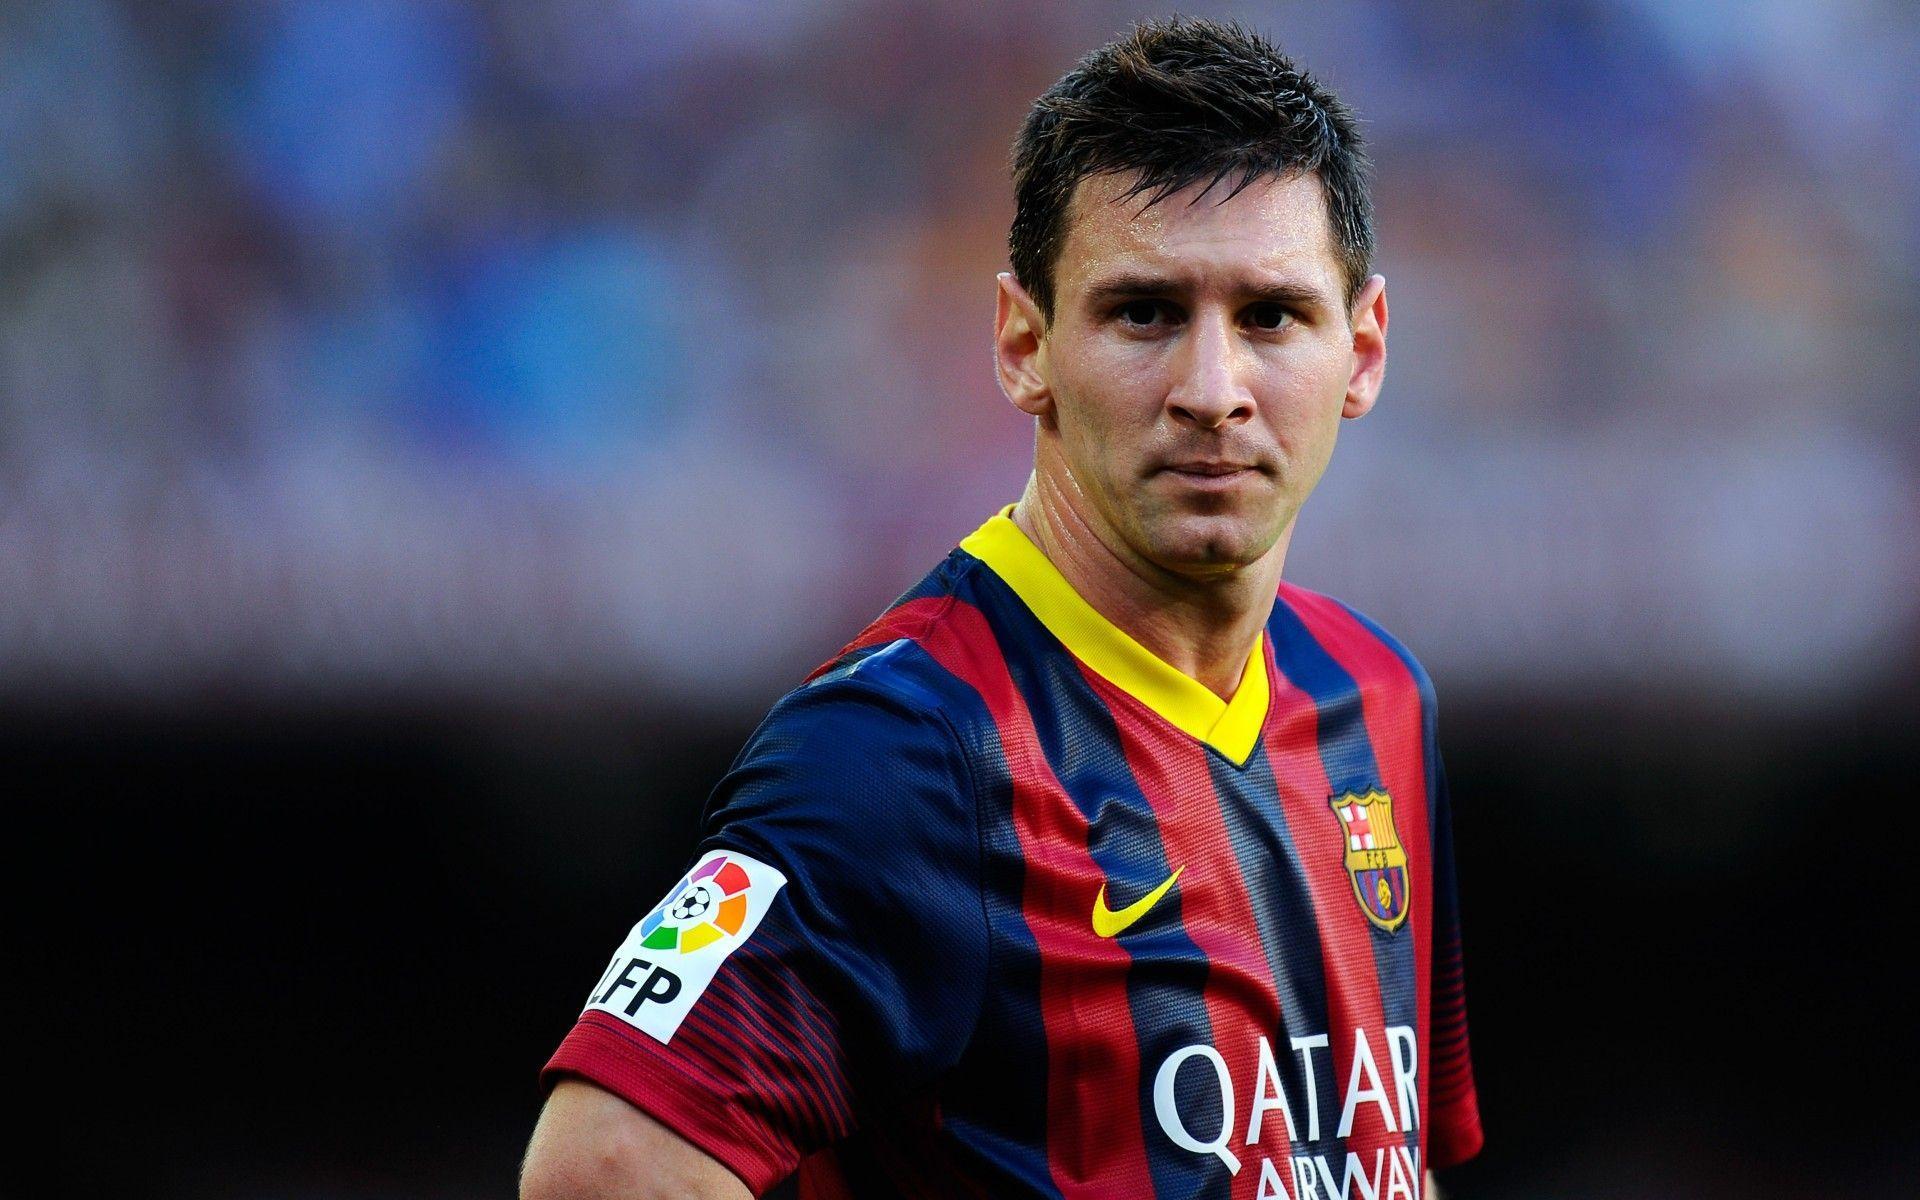 Messi Football Wallpaper HD. Wallpaper, Background, Image